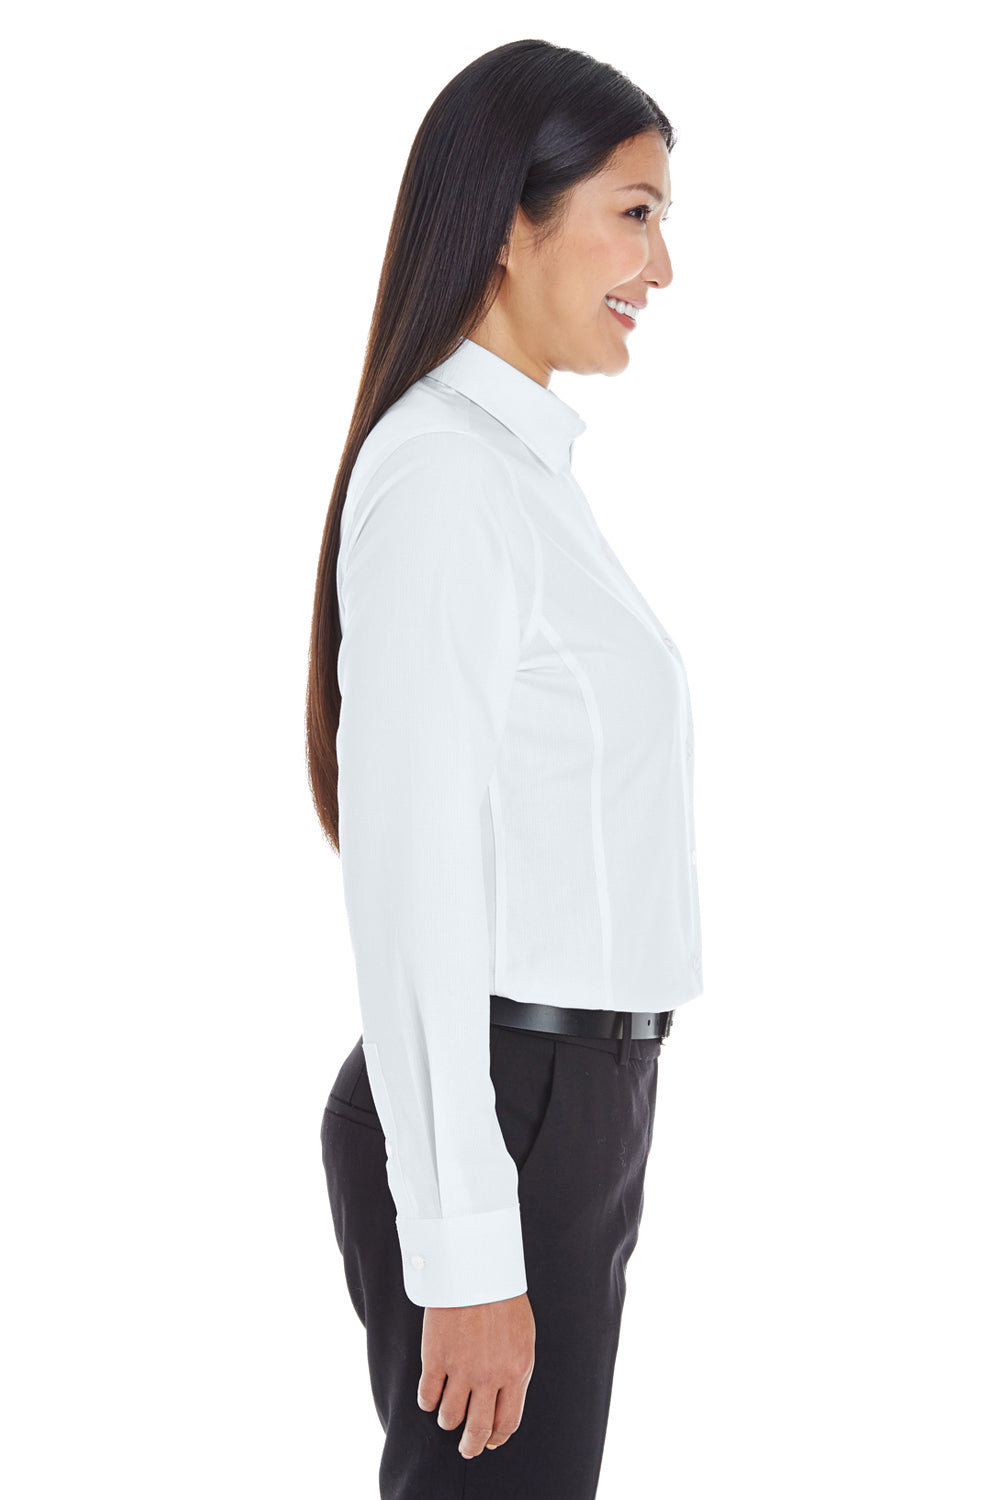 Devon & Jones DG532W Womens Crown Woven Collection Wrinkle Resistant Long Sleeve Button Down Shirt White Side